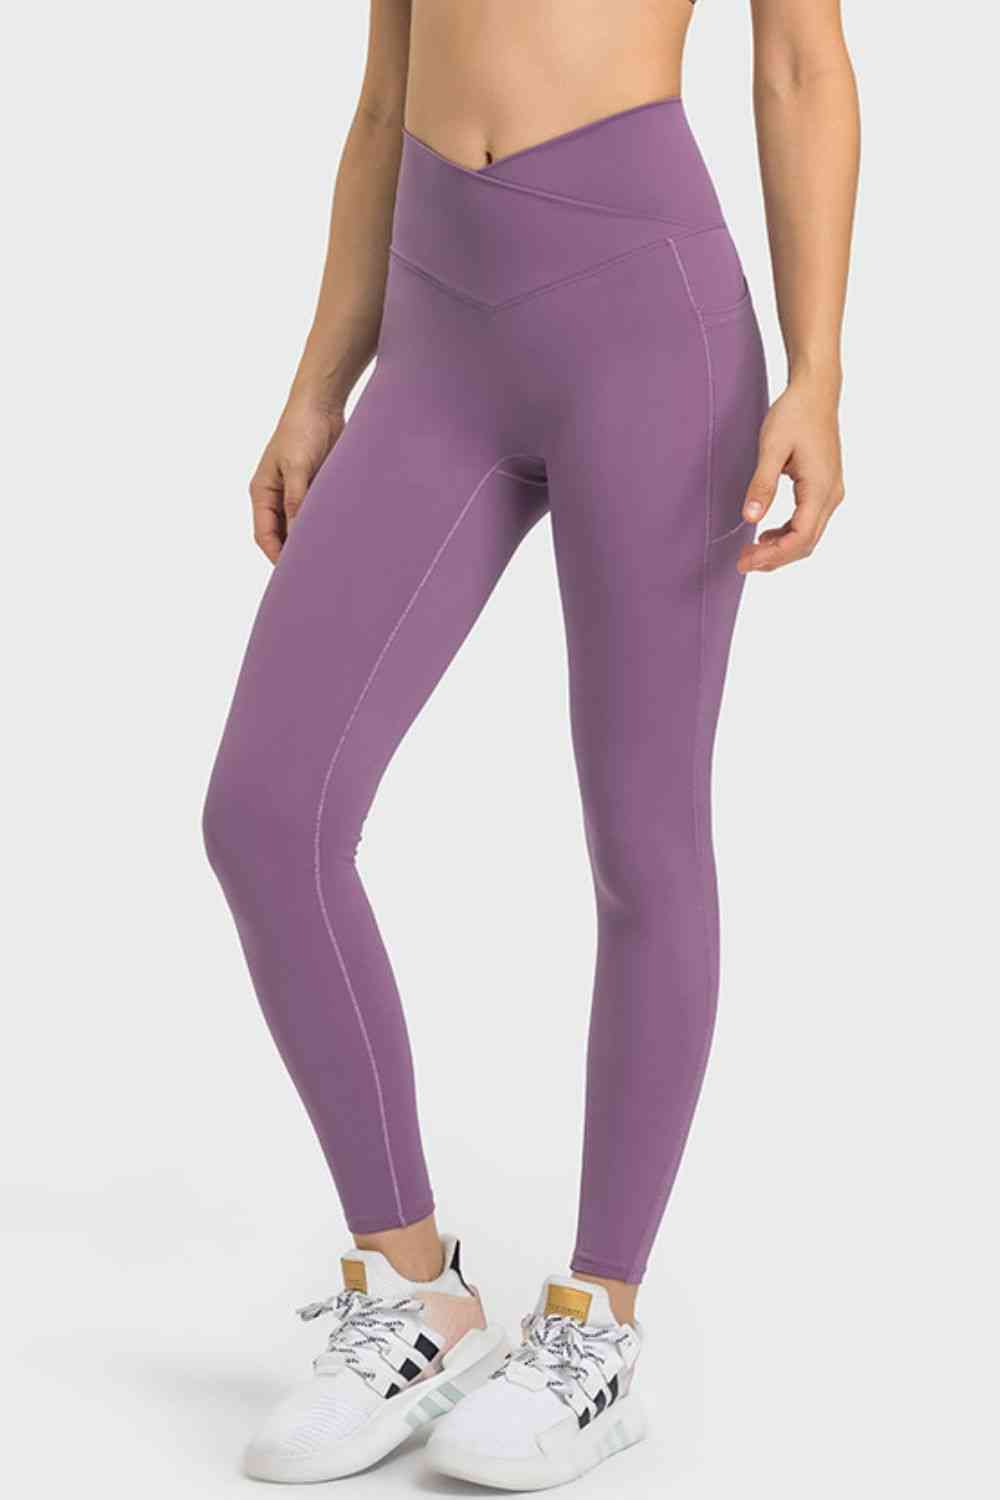 Lululemon Womens 6 Purple Tie Dye Criss Cross Align Legging Yoga Pant